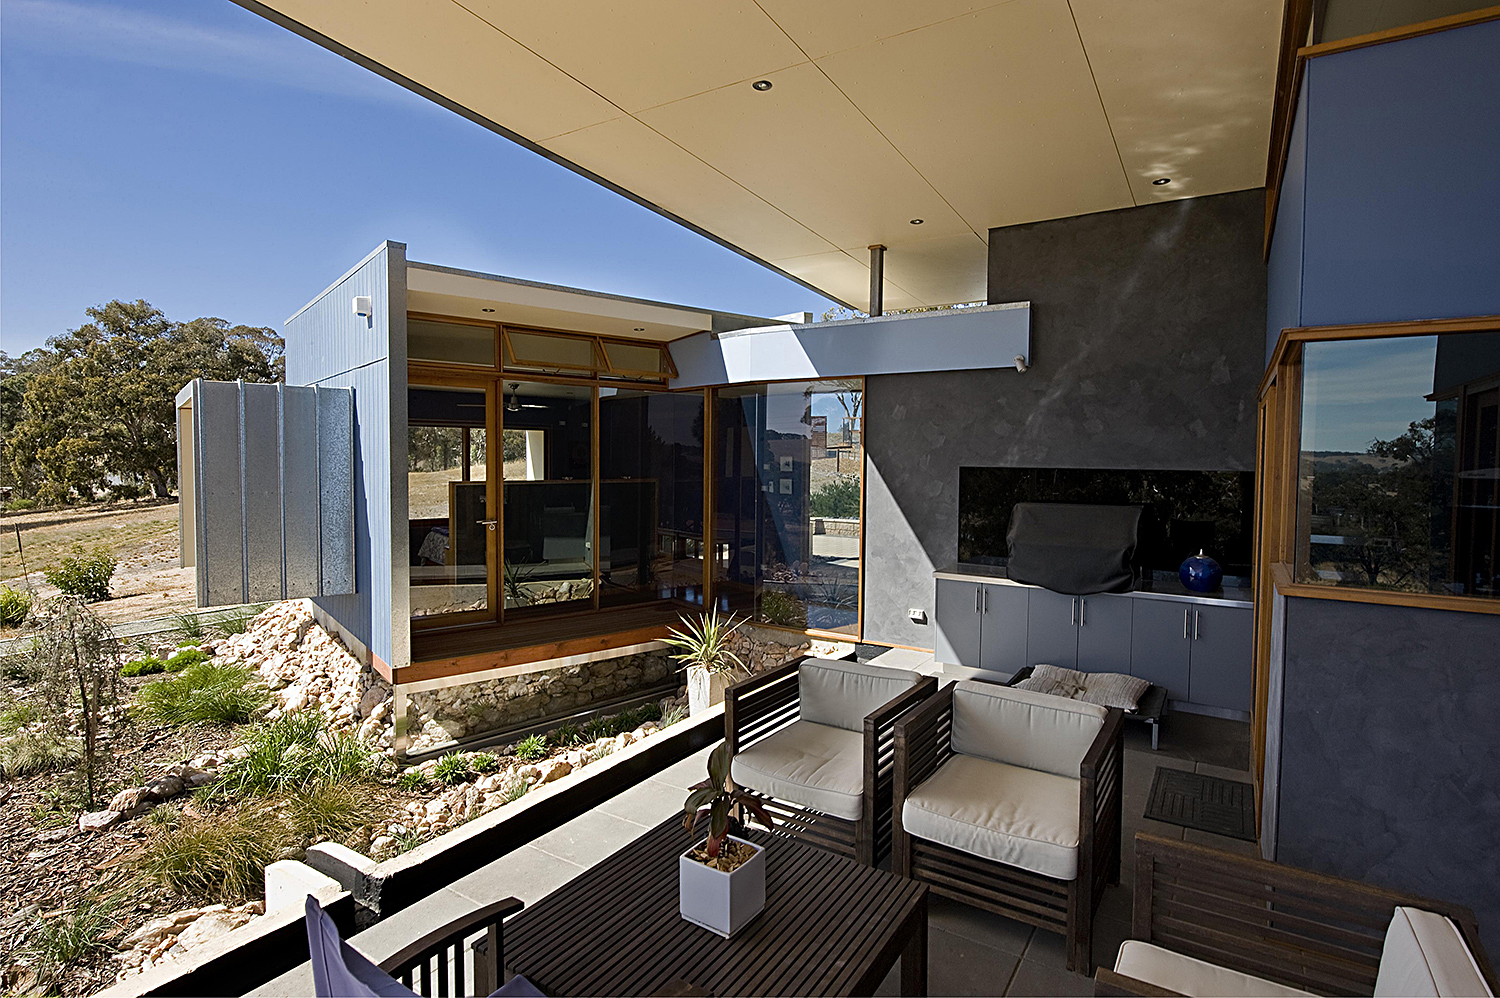 Birdwood Art House - A contemporary architecturally designed home